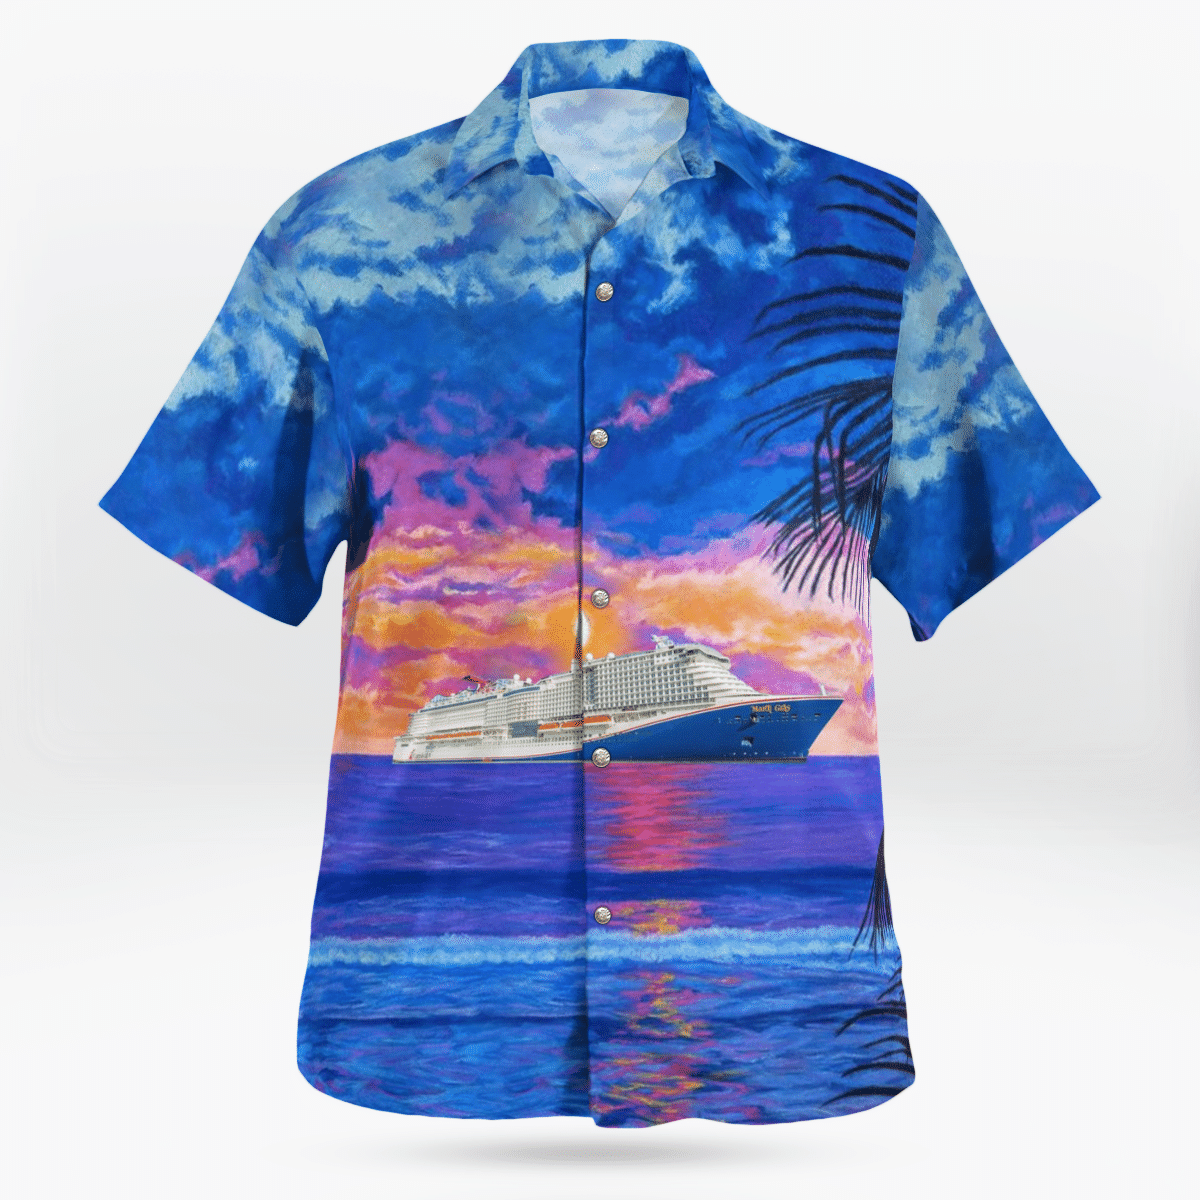 HOT Carnival Cruise Line's Mardi Gras Tropical Shirt, Shorts2